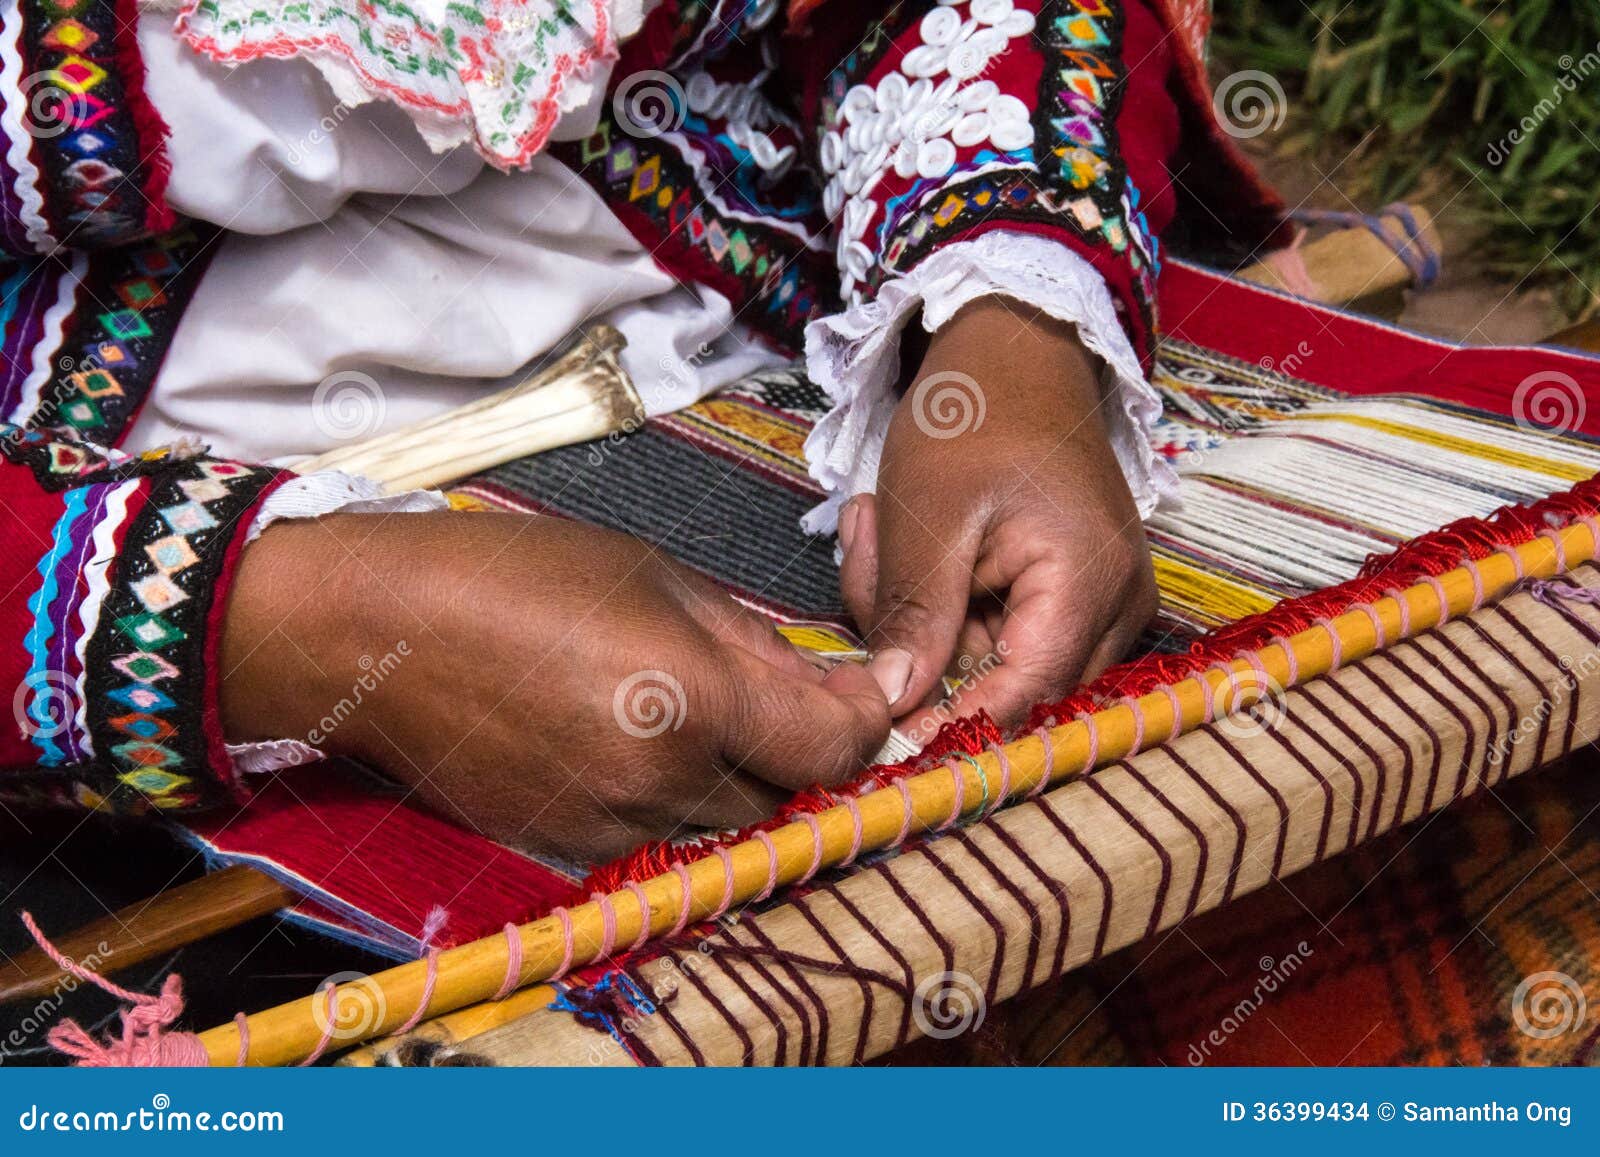 traditional peruvian weaving